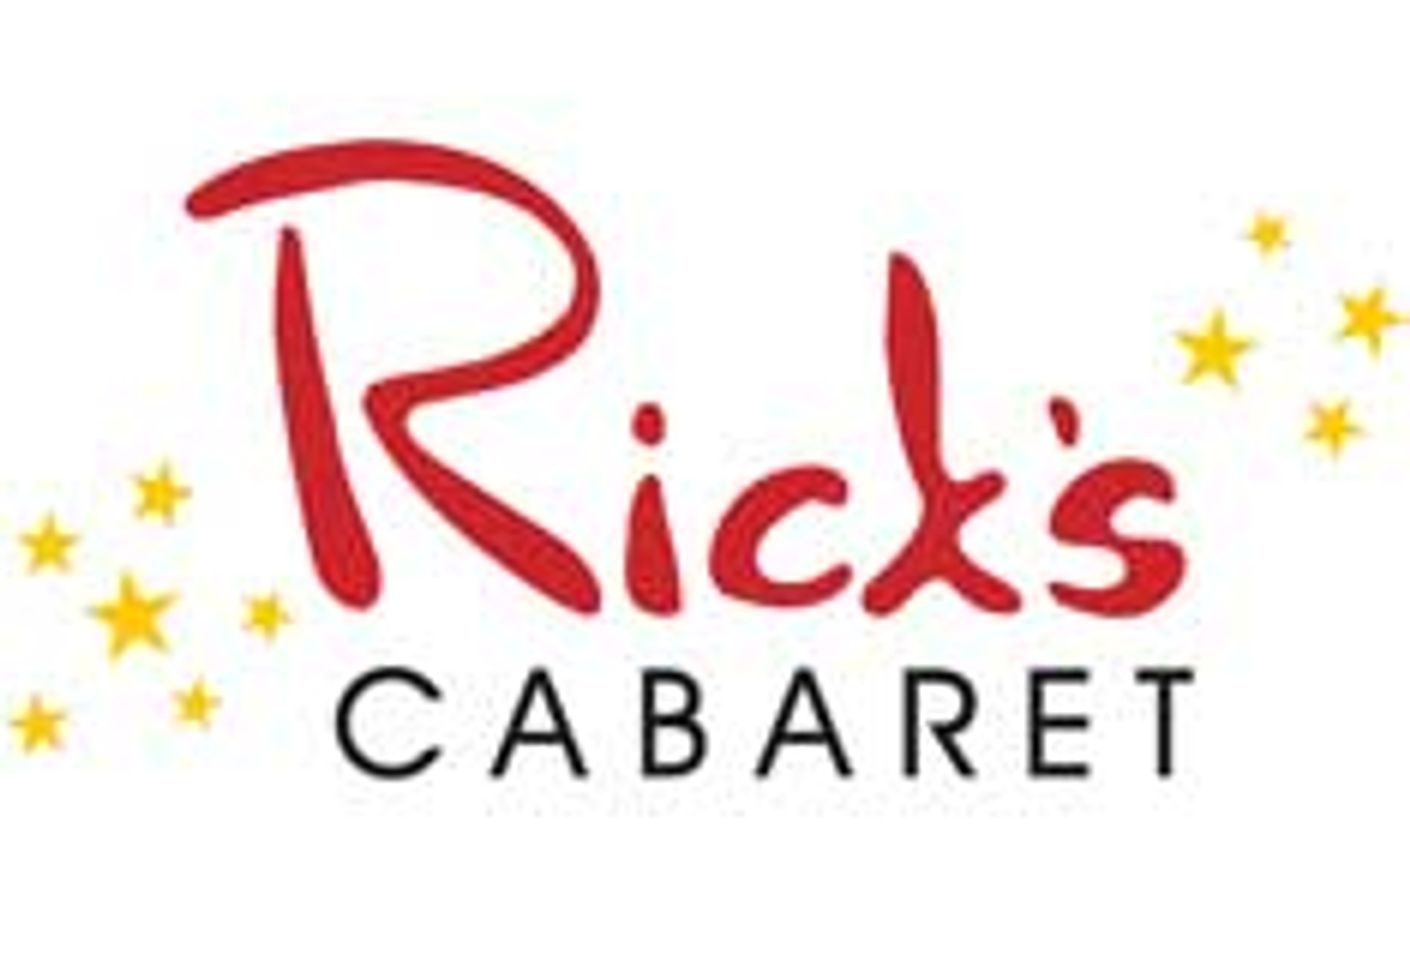 Rick's Cabaret International Inc. To Acquire 11 Jaguars Clubs